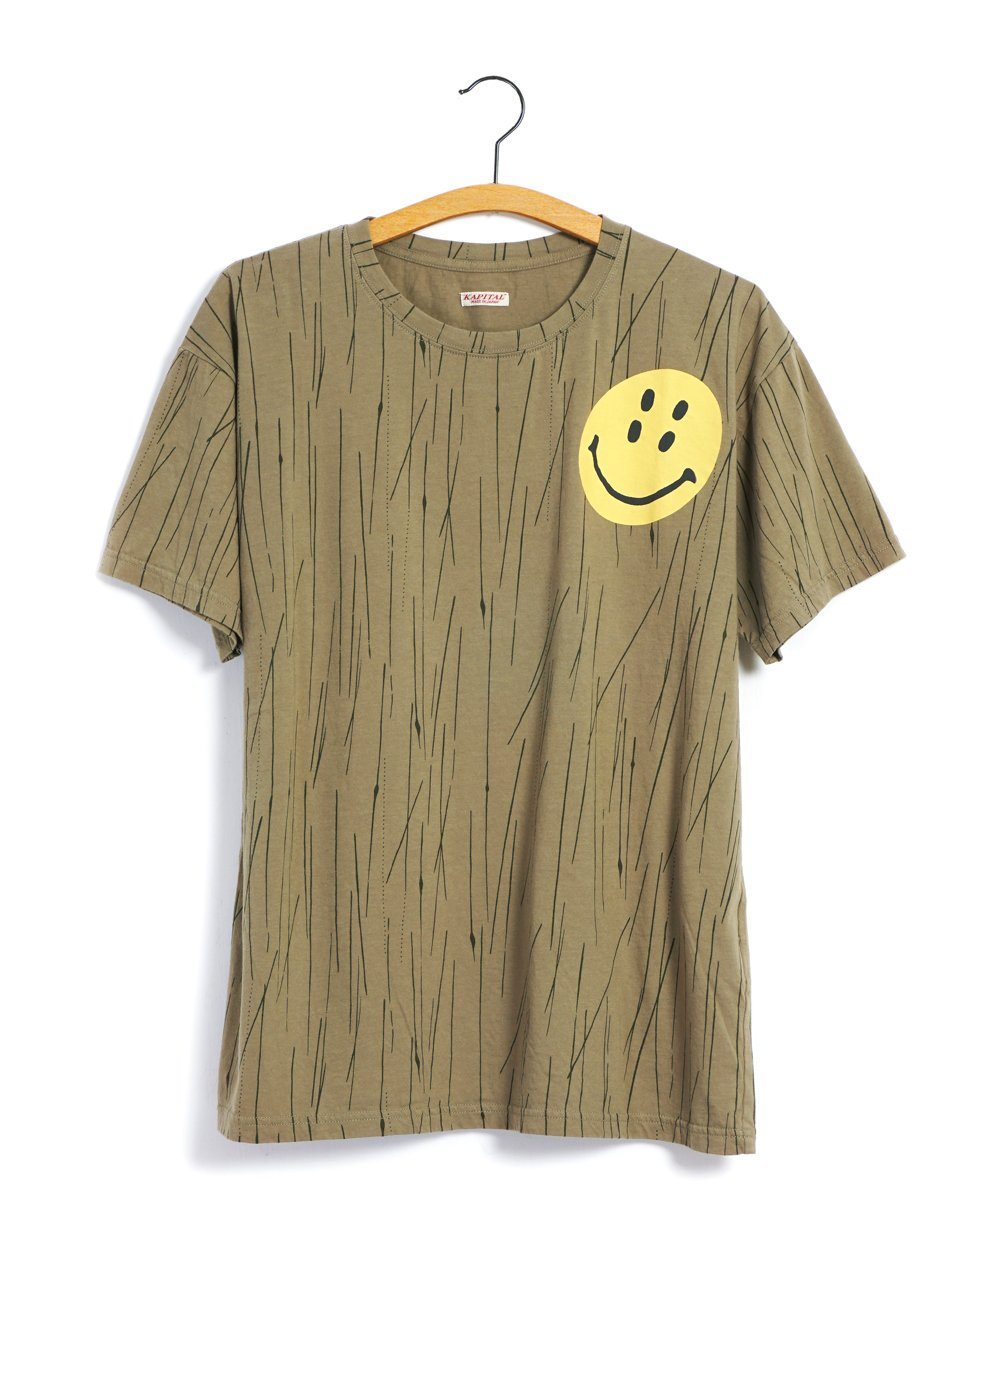 KAPITAL - RAIN CAMO RAIN SMILE | Jersey Crew T | Khaki - HANSEN Garments